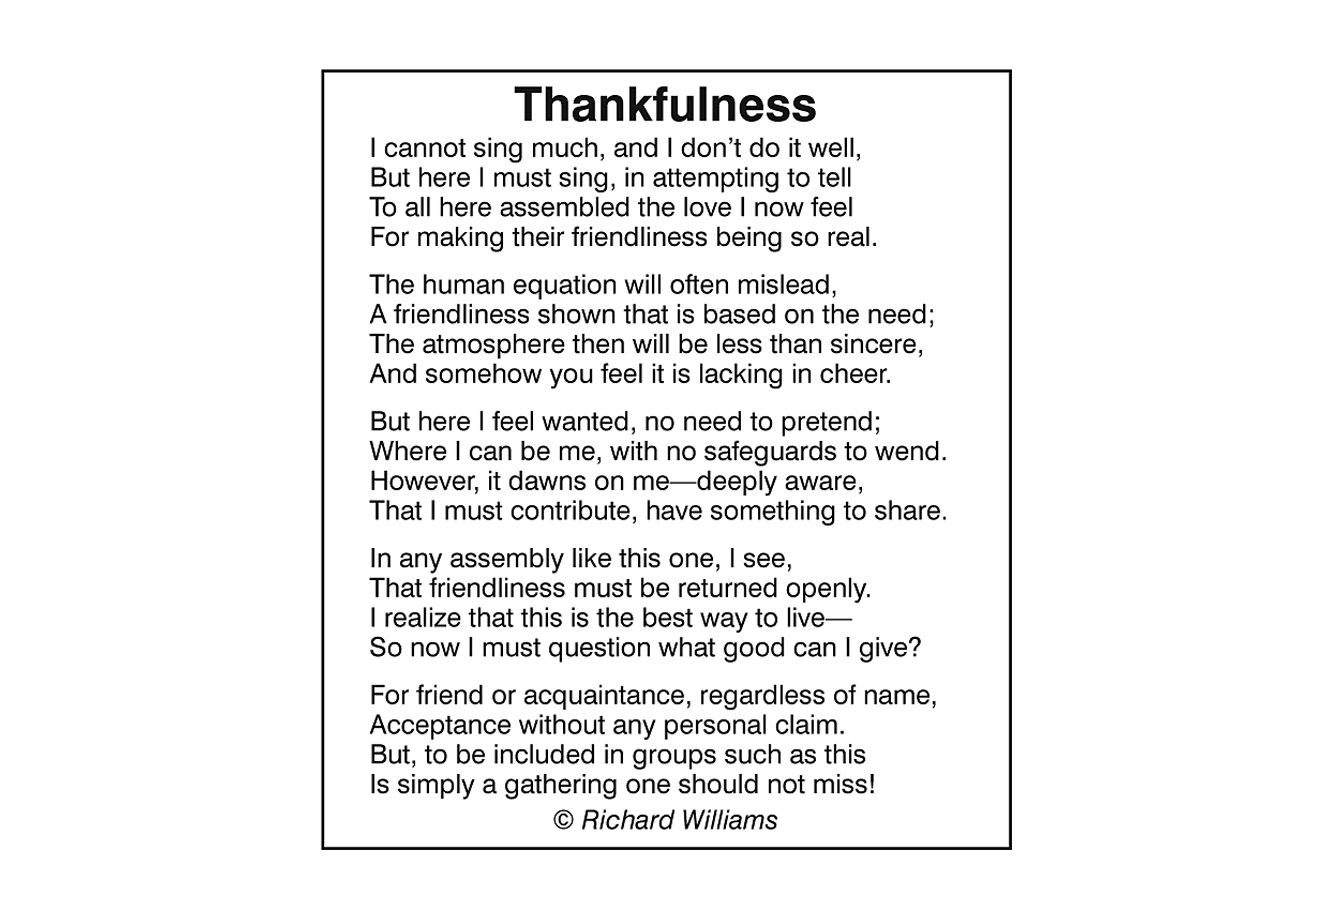 Richard Williams Poem: Thankfulness